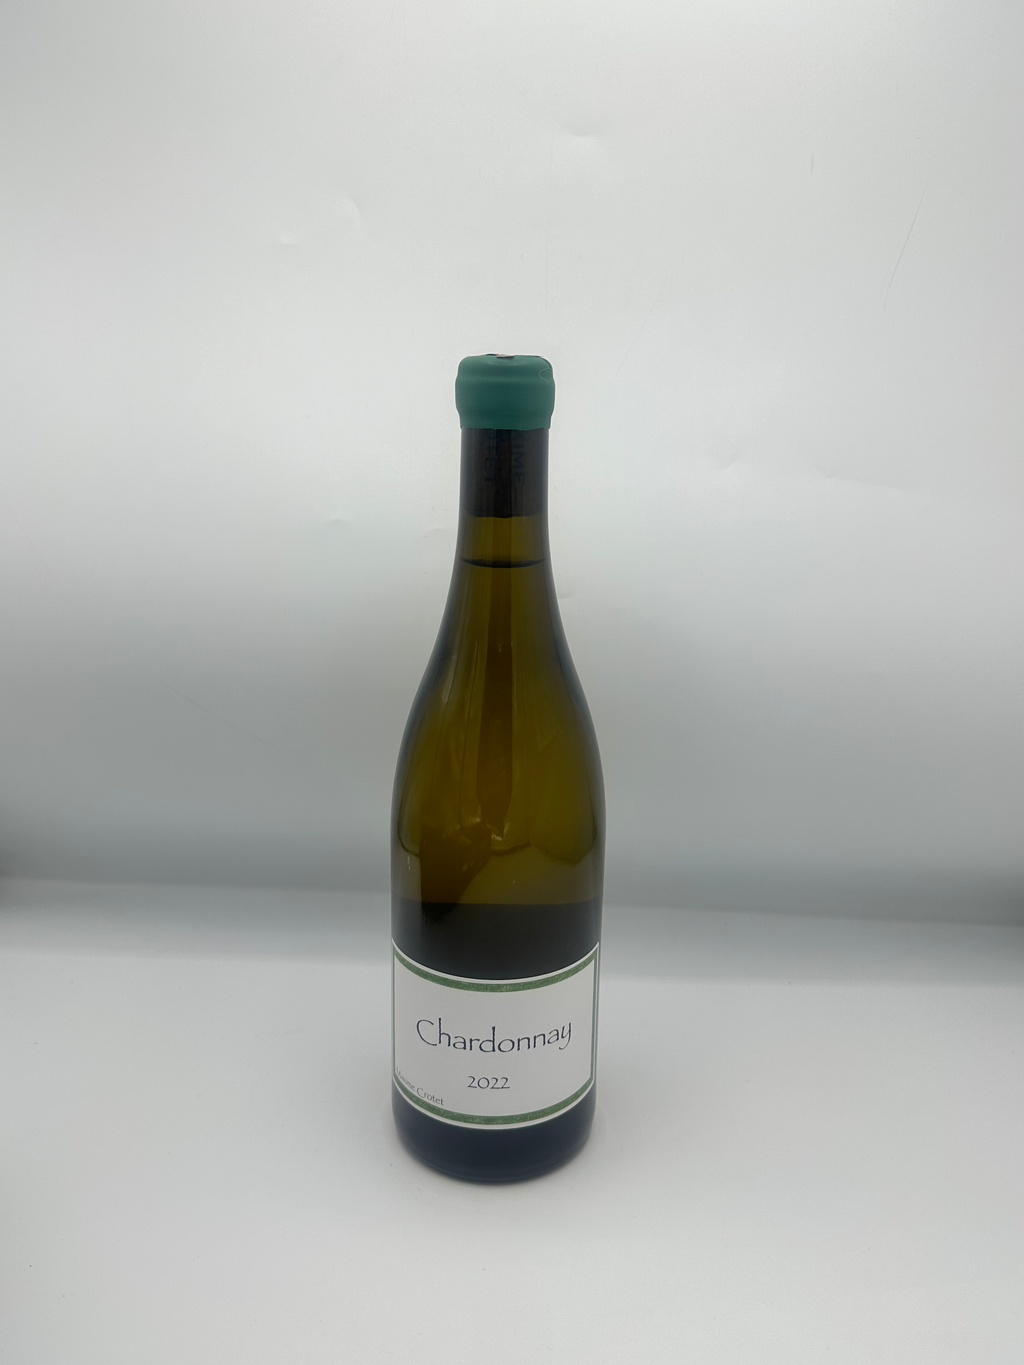 VDF "Chardonnay" 2022 White - Maxime Crotet